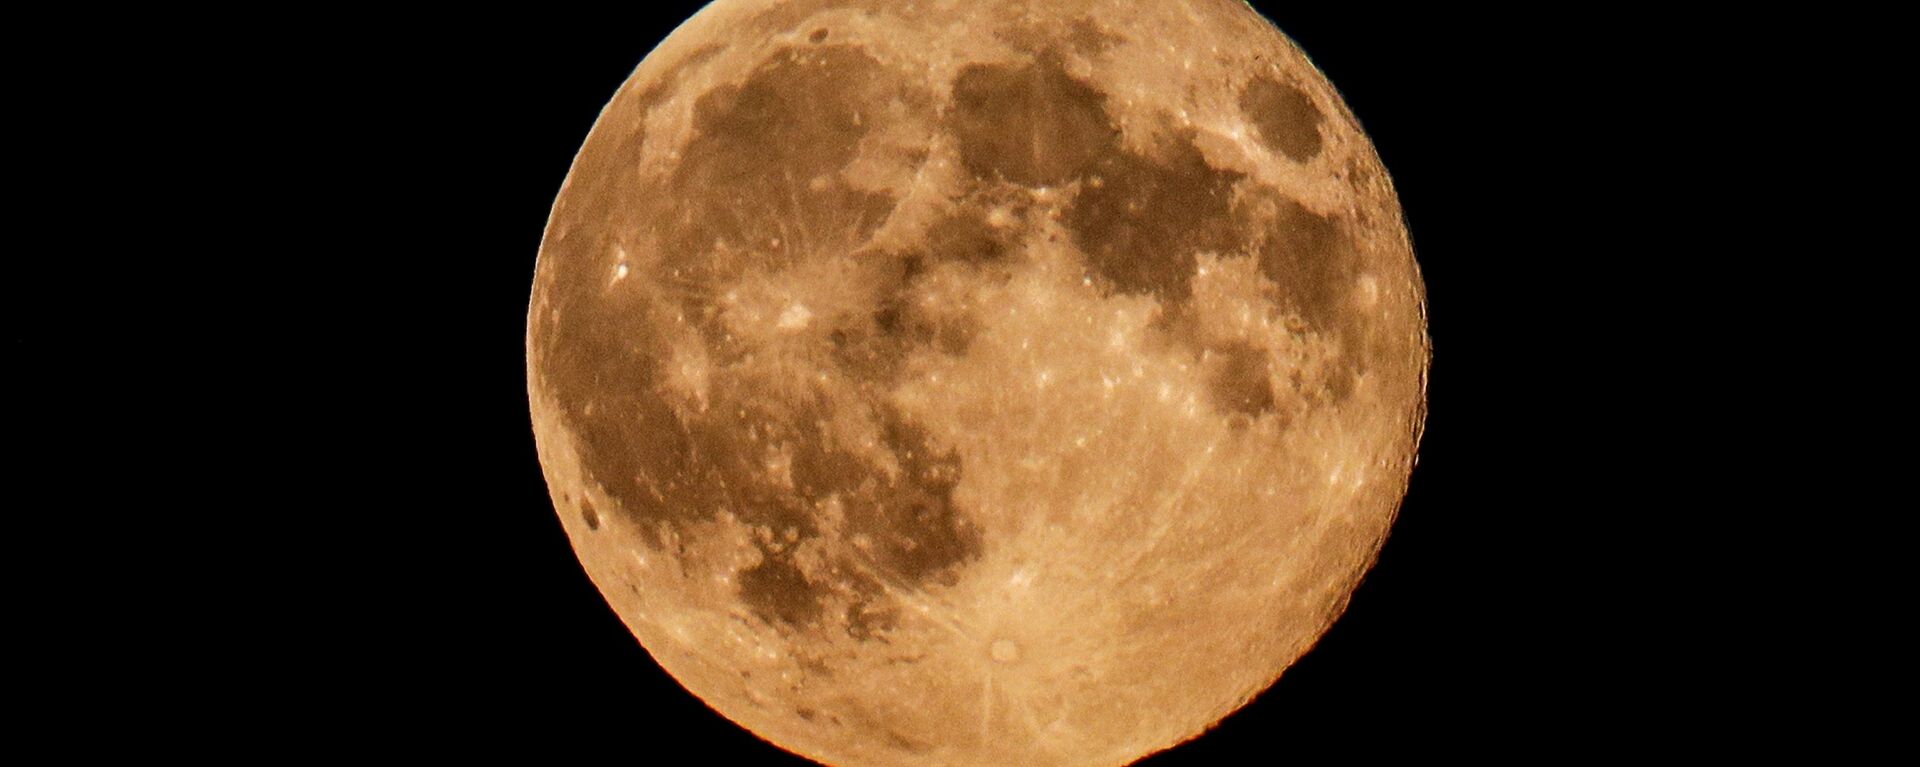 La Luna (imagen referencial) - Sputnik Mundo, 1920, 09.03.2021